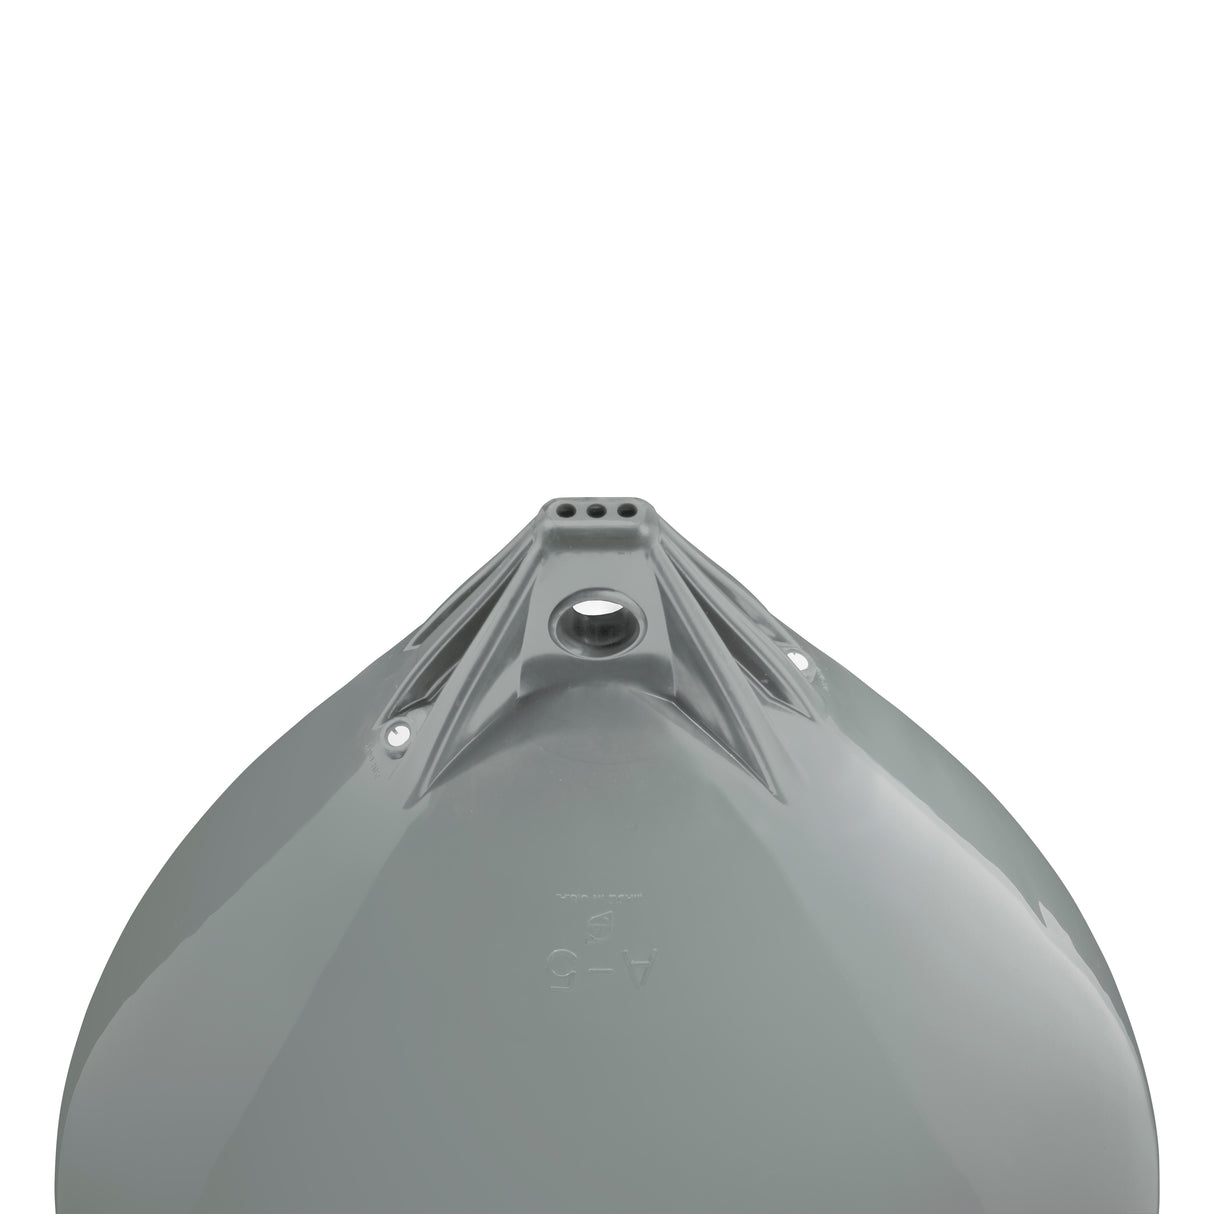 Grey buoy with Grey-Top, Polyform A-5 angled shot